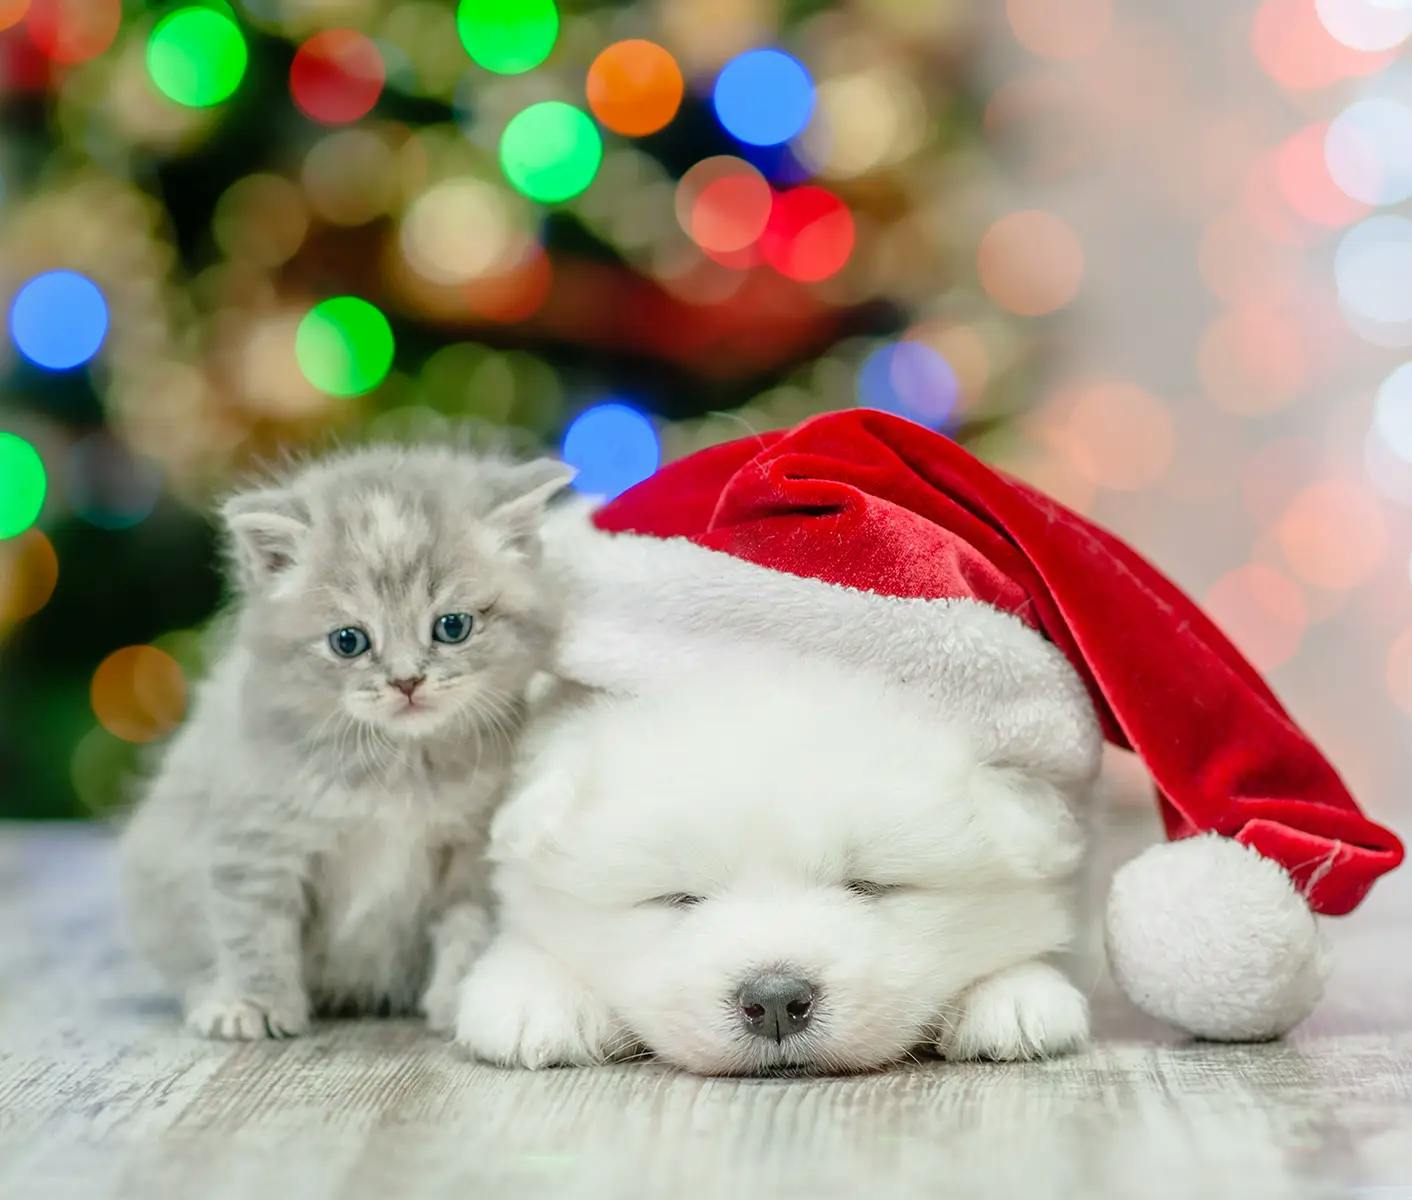 Christmas dog and cat